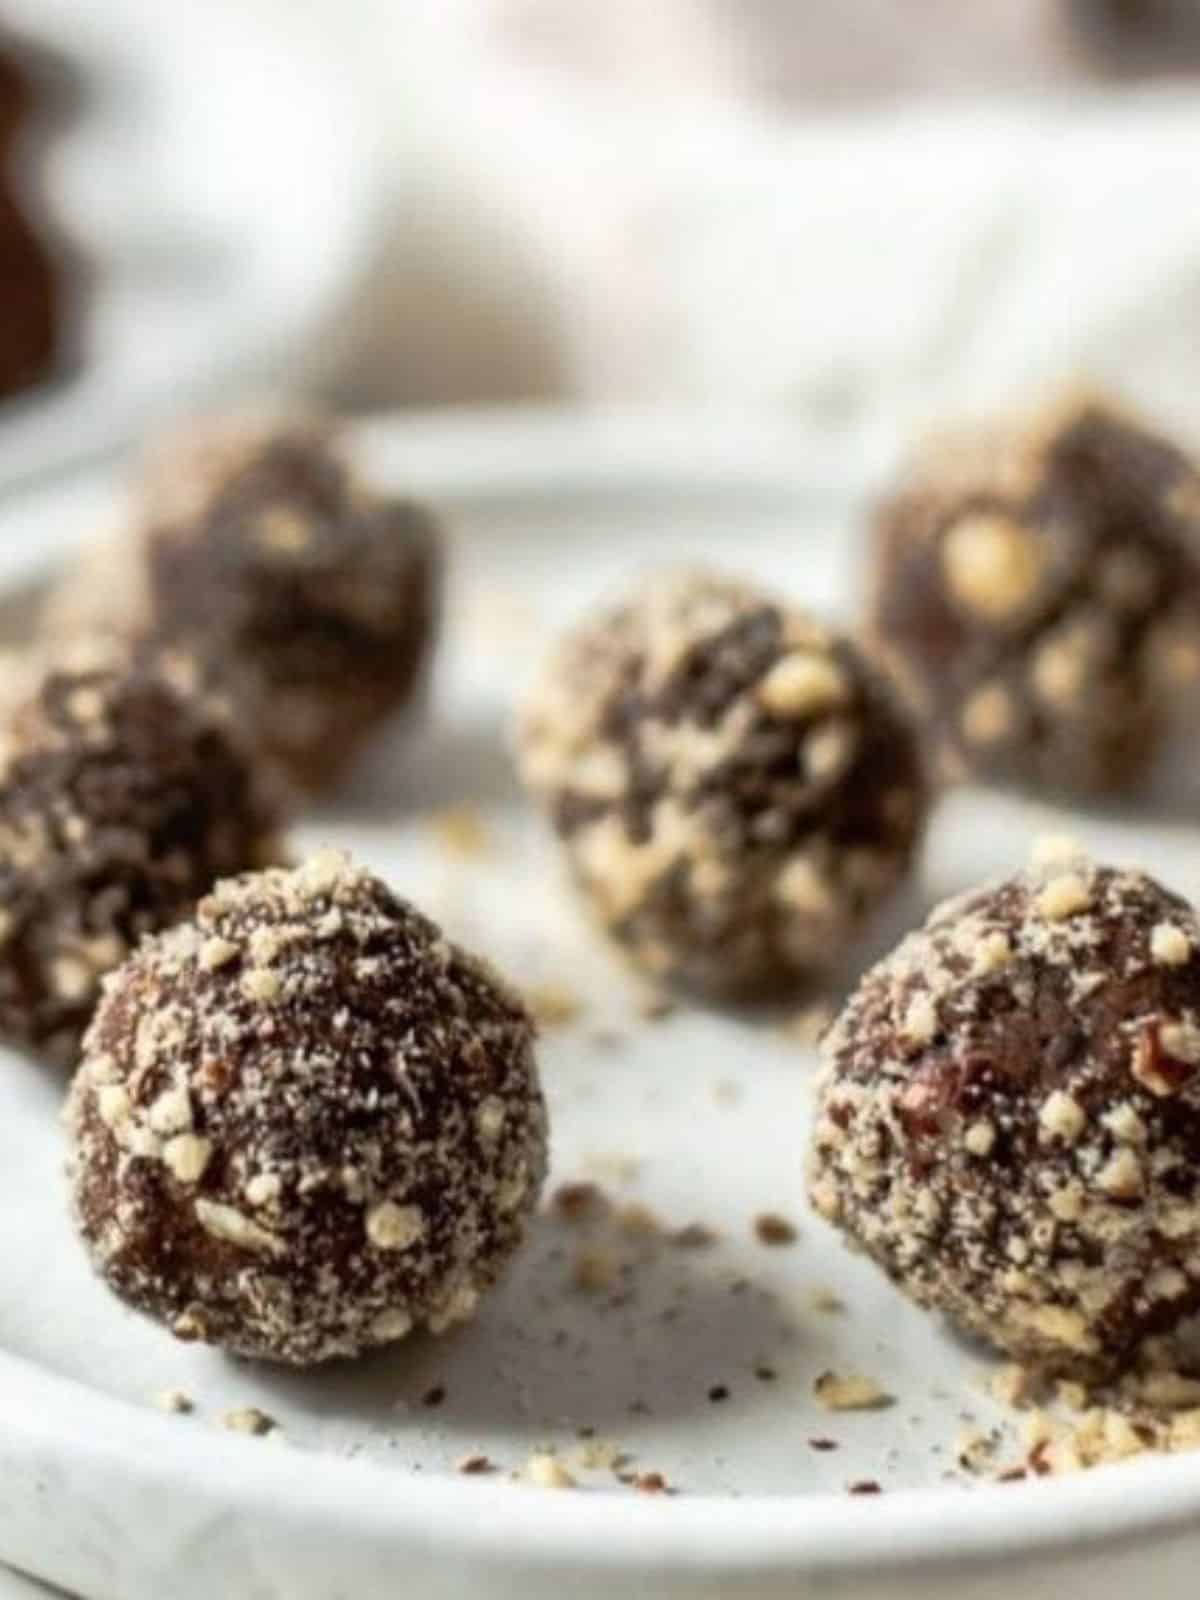 Chocolate Hazelnut Energy Balls covered with hazelnuts on a plate.